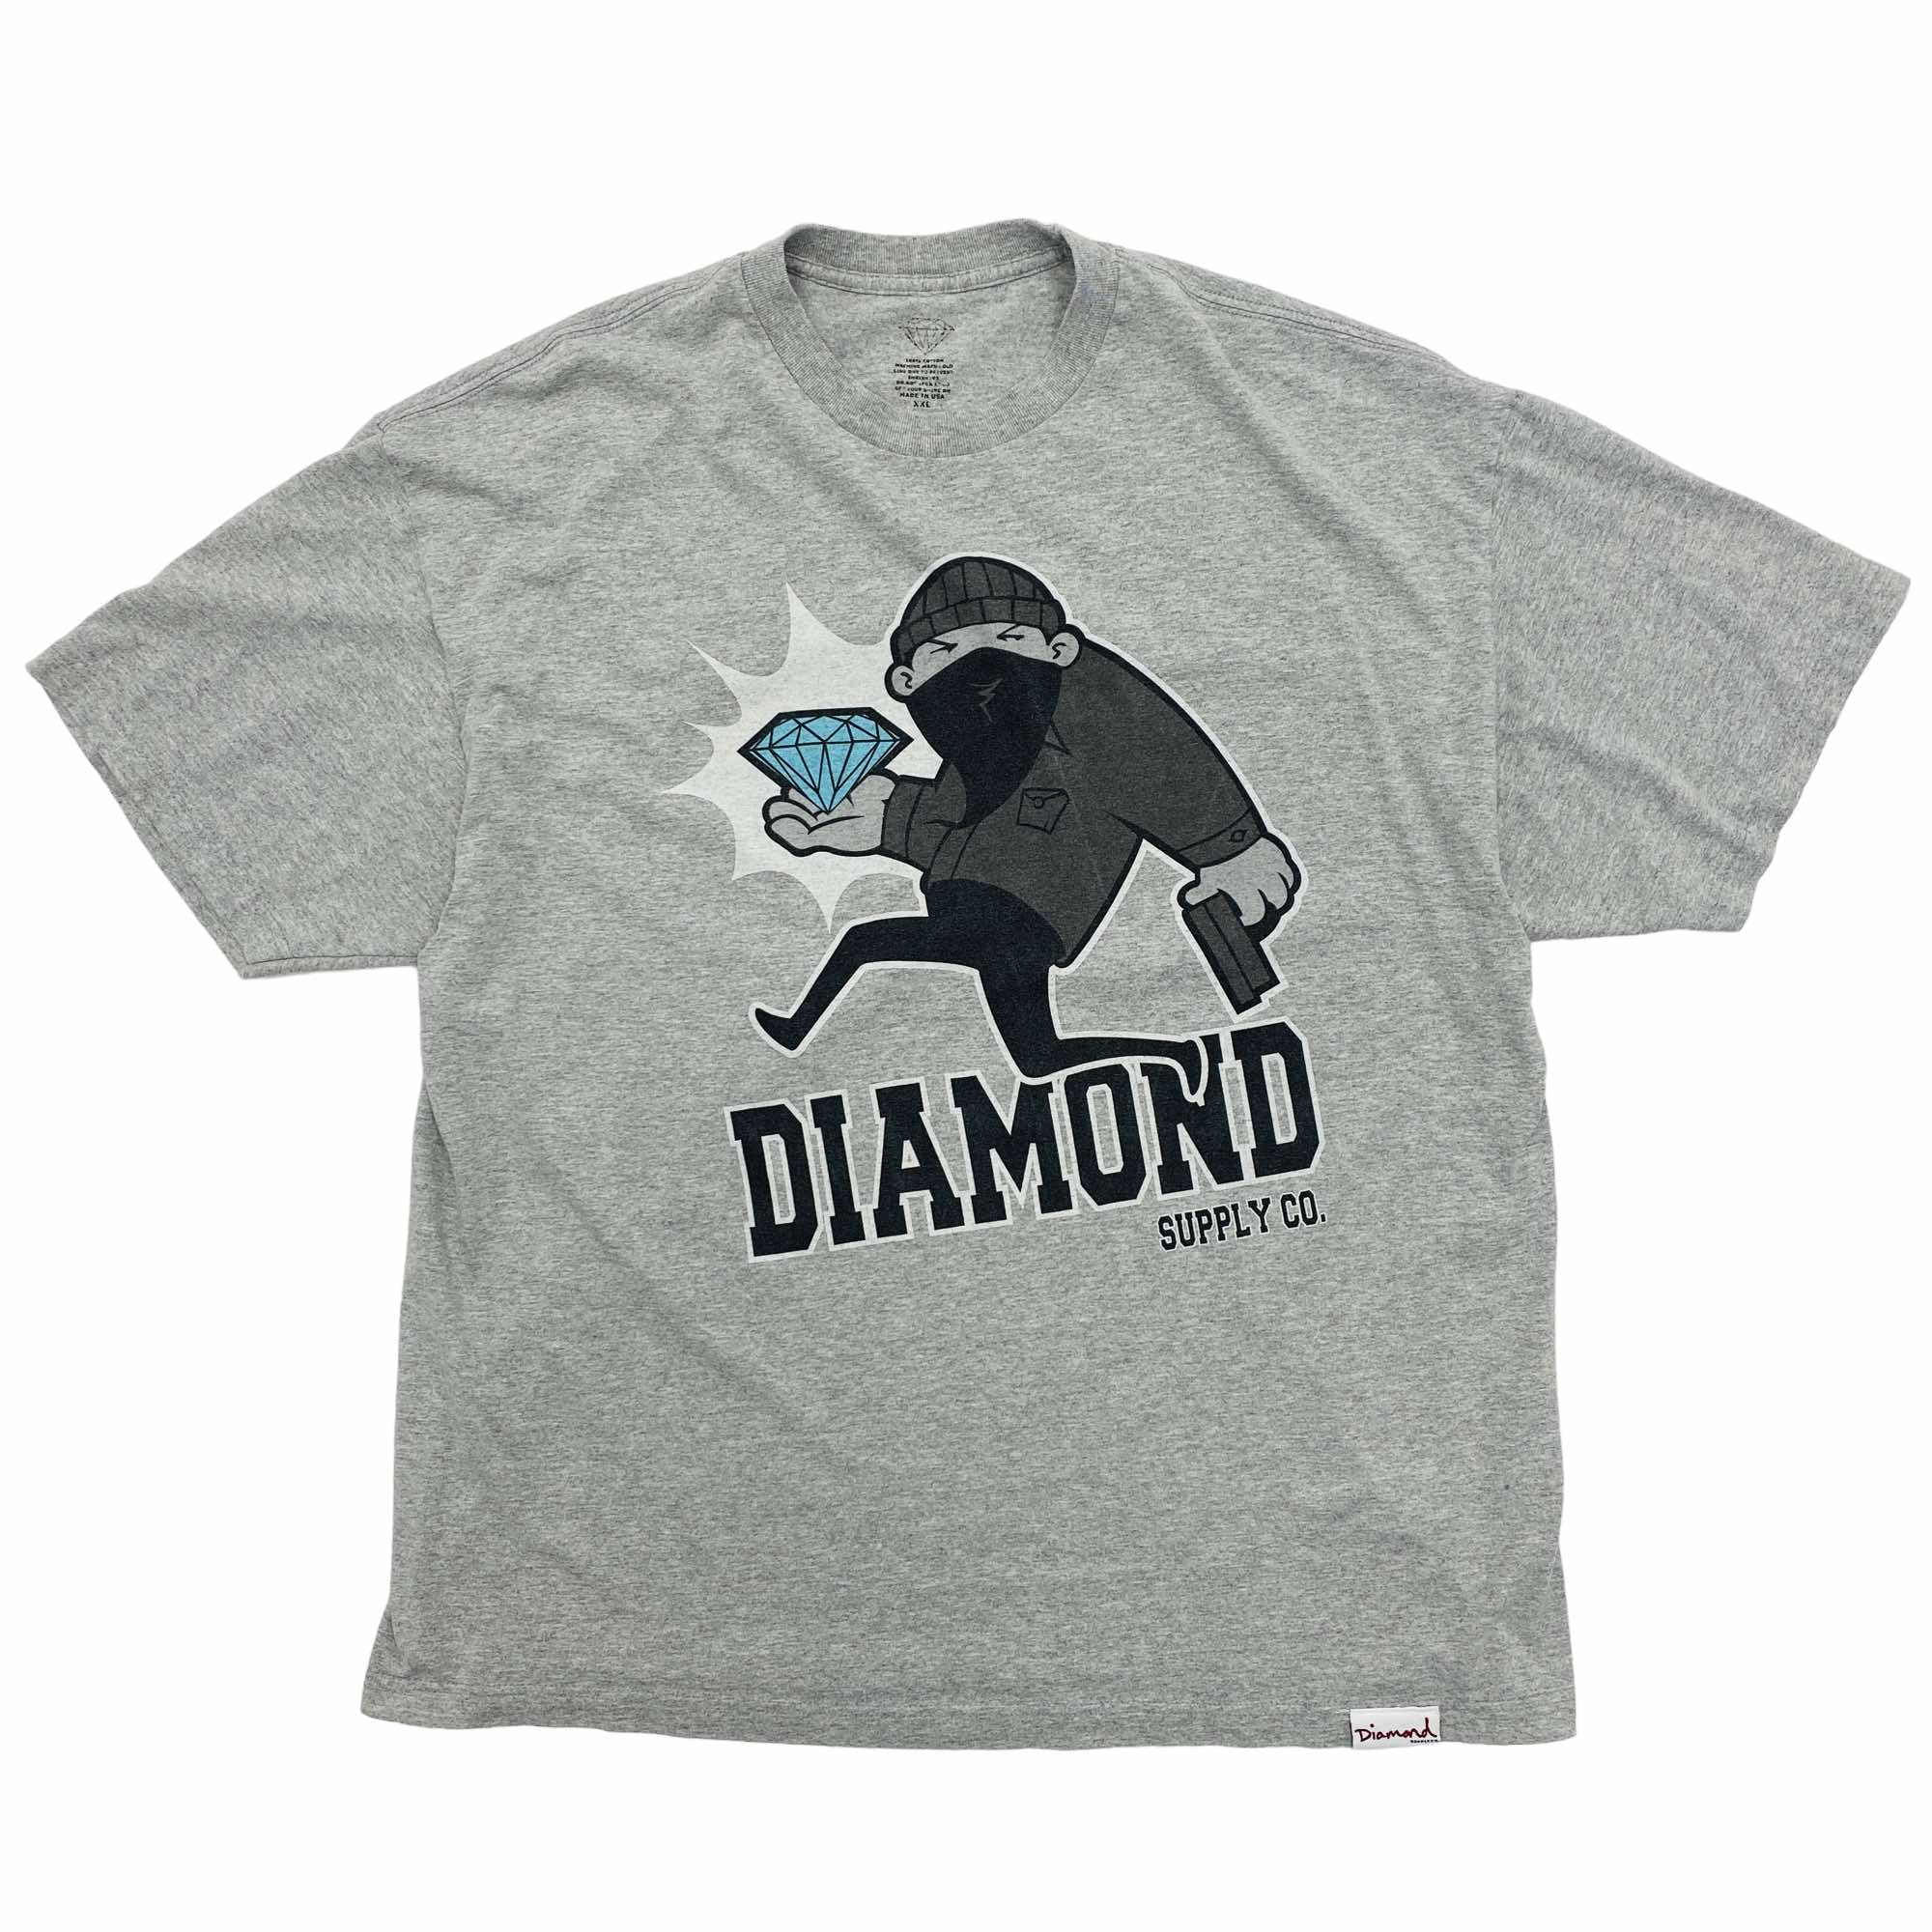 Diamond Supply Co. Graphic T-Shirt - 2XL